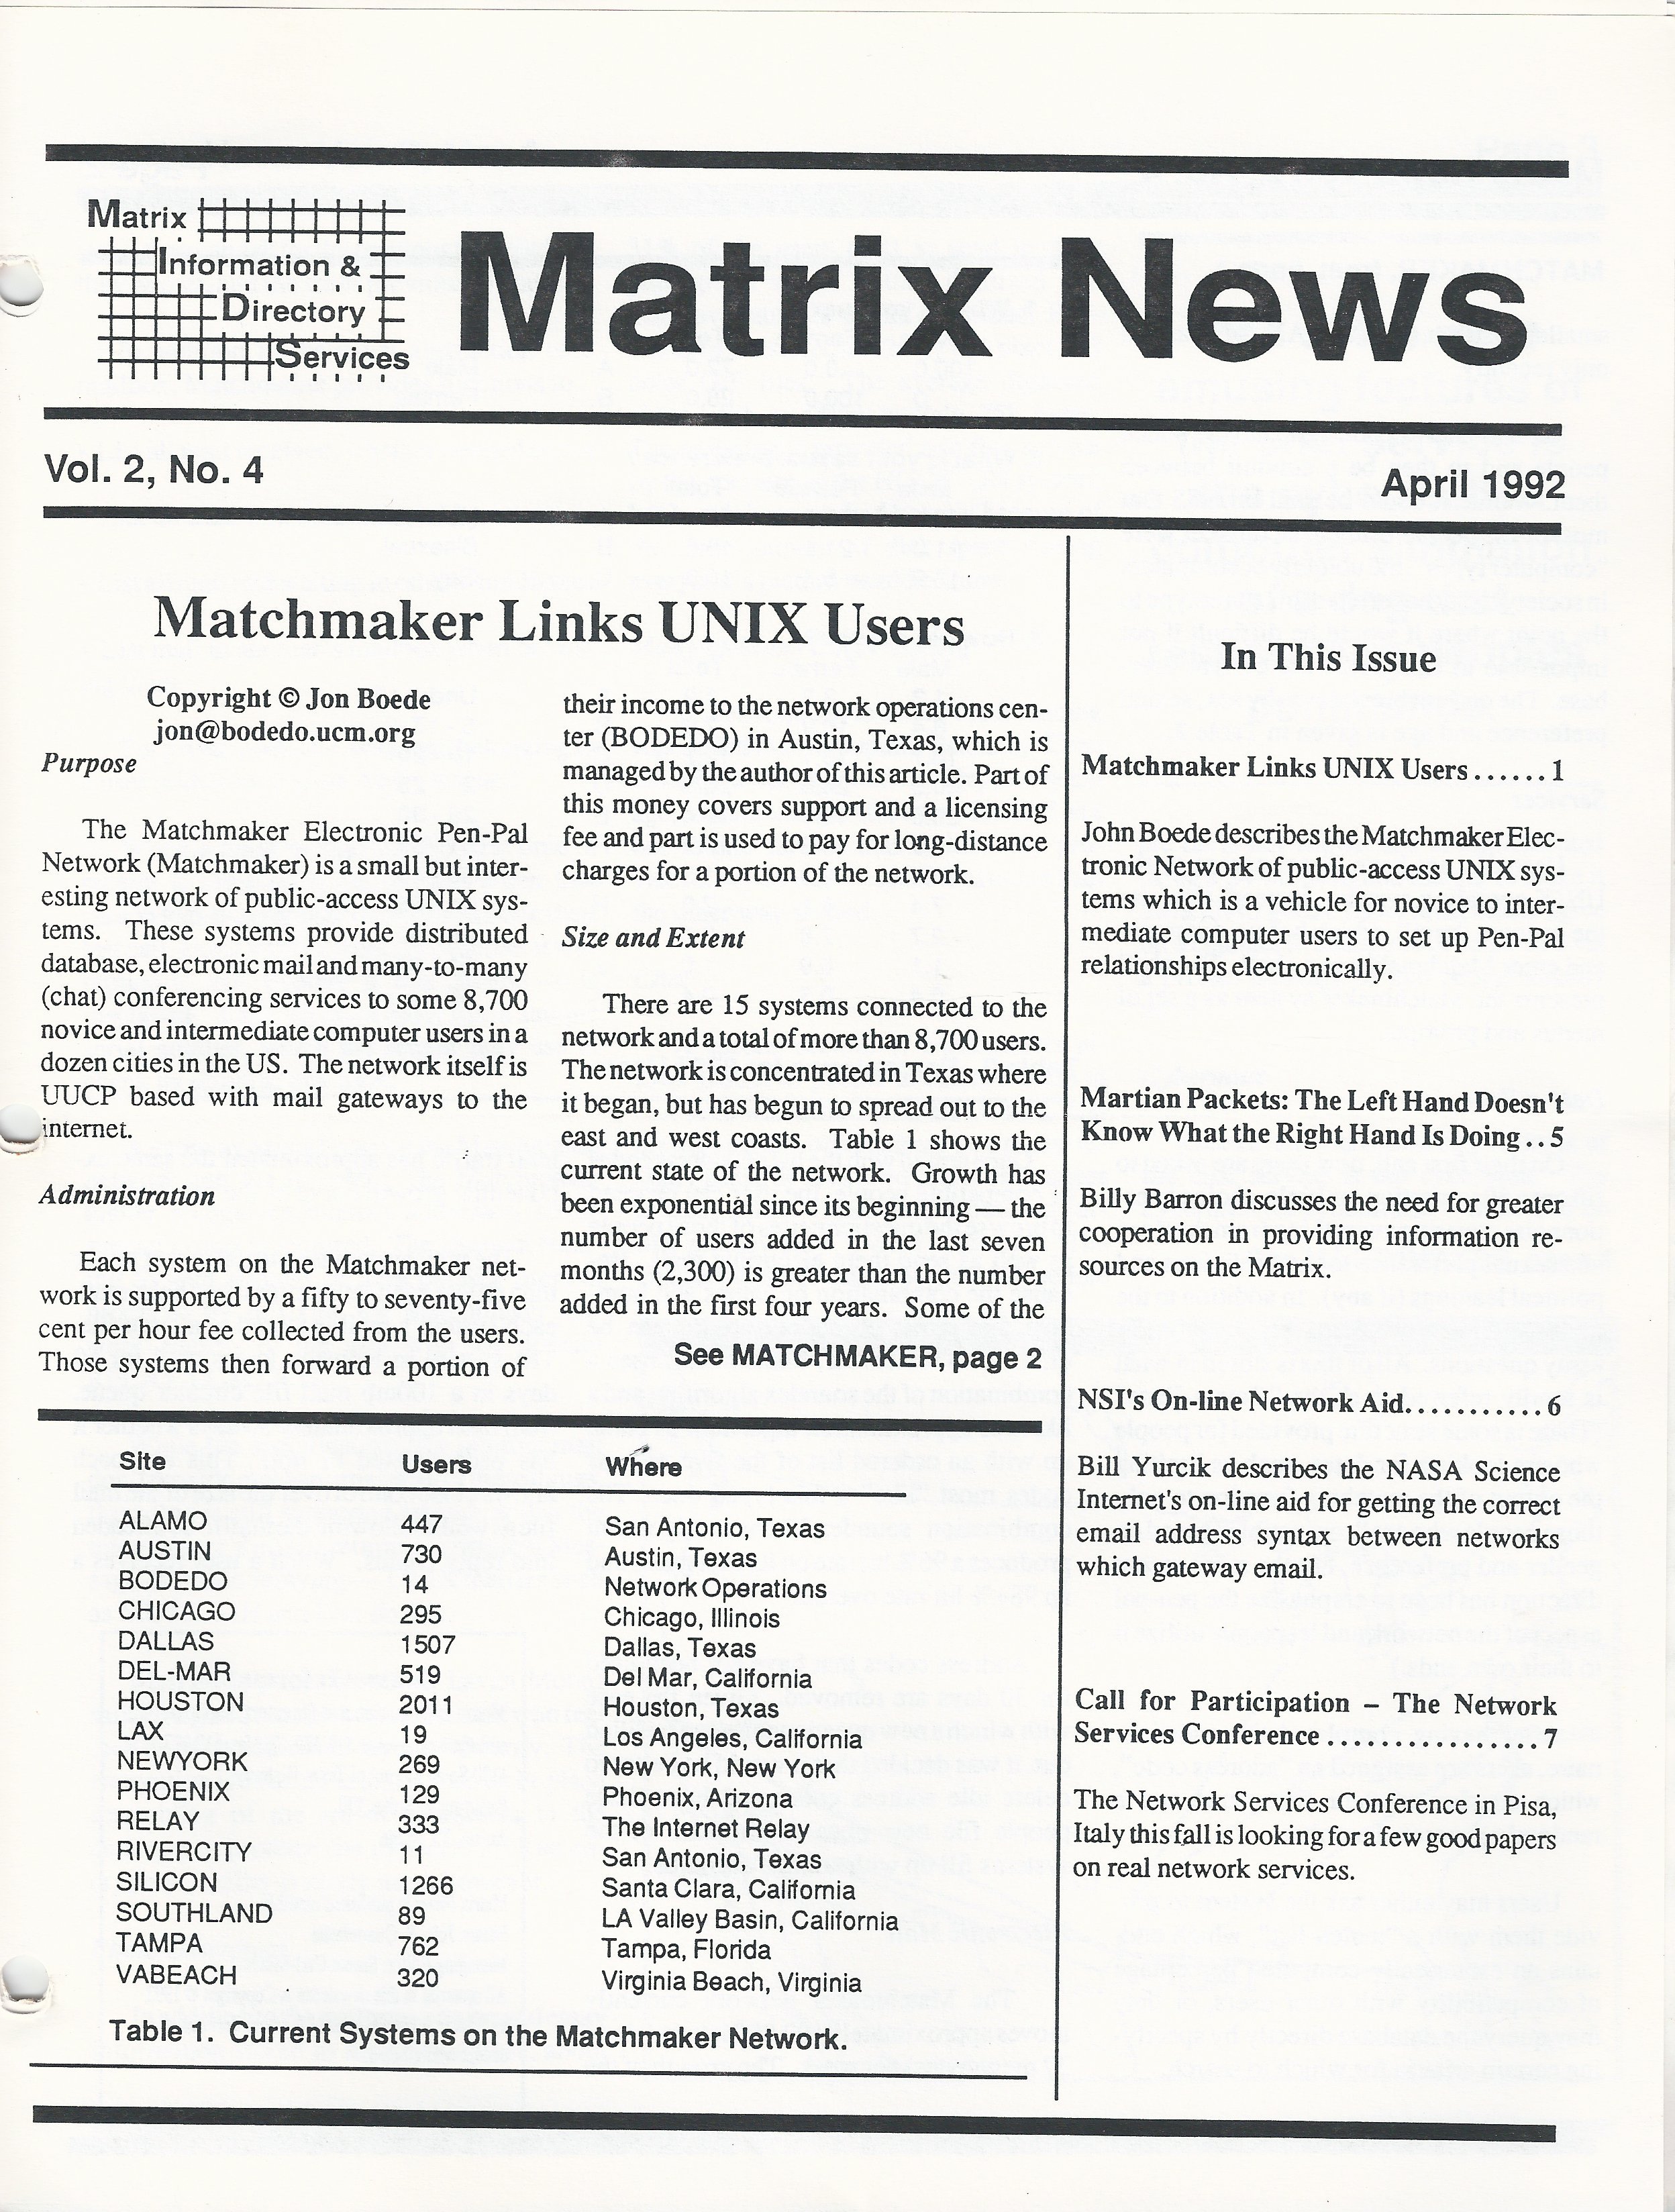 Matchmaker Links UNIX Users, by Jon Boede